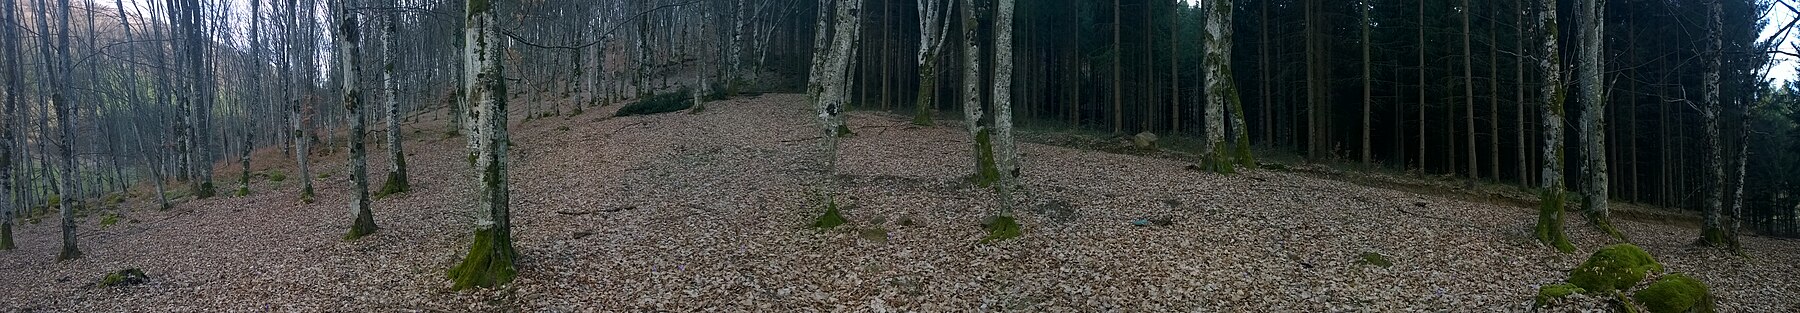 Varciorog forest panorama.jpg